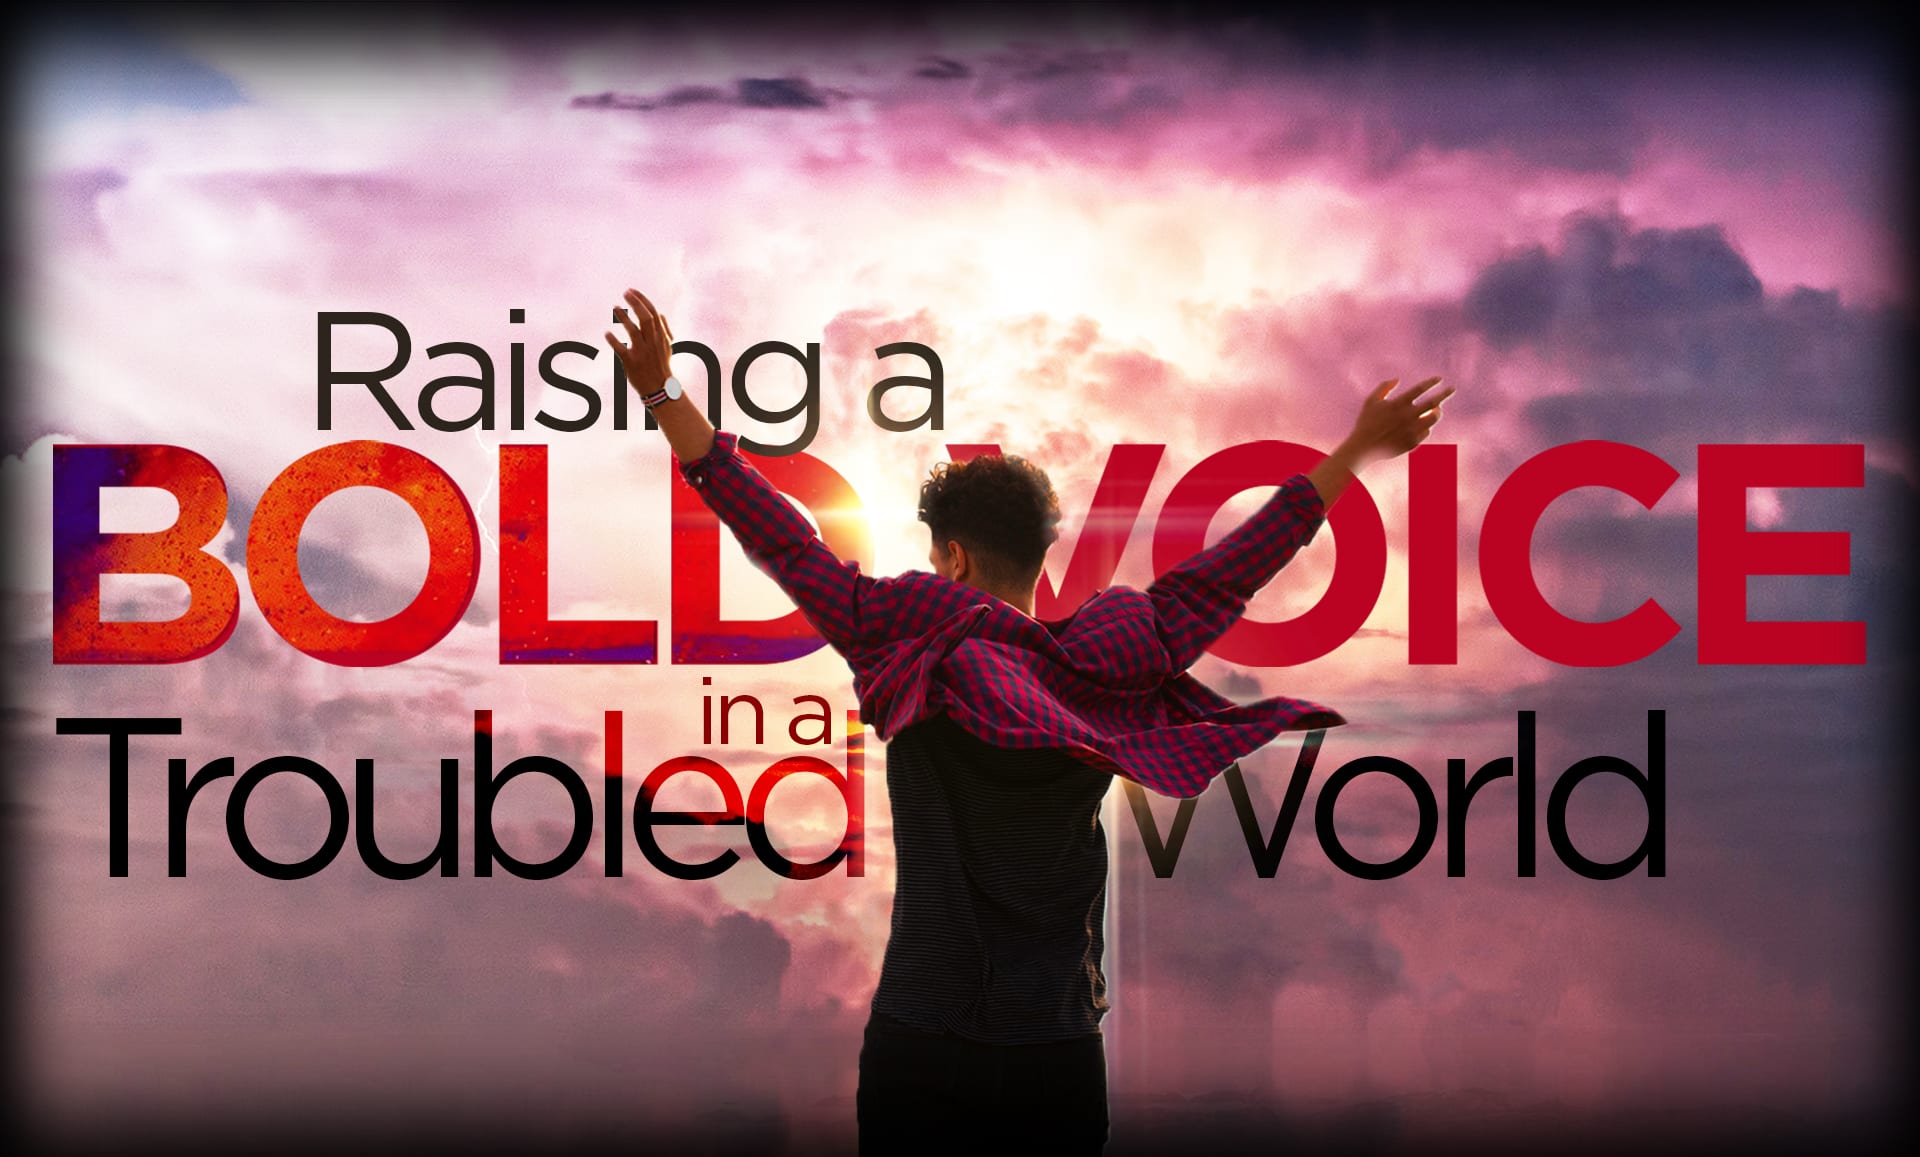 Raising Bold Voice Troubled World